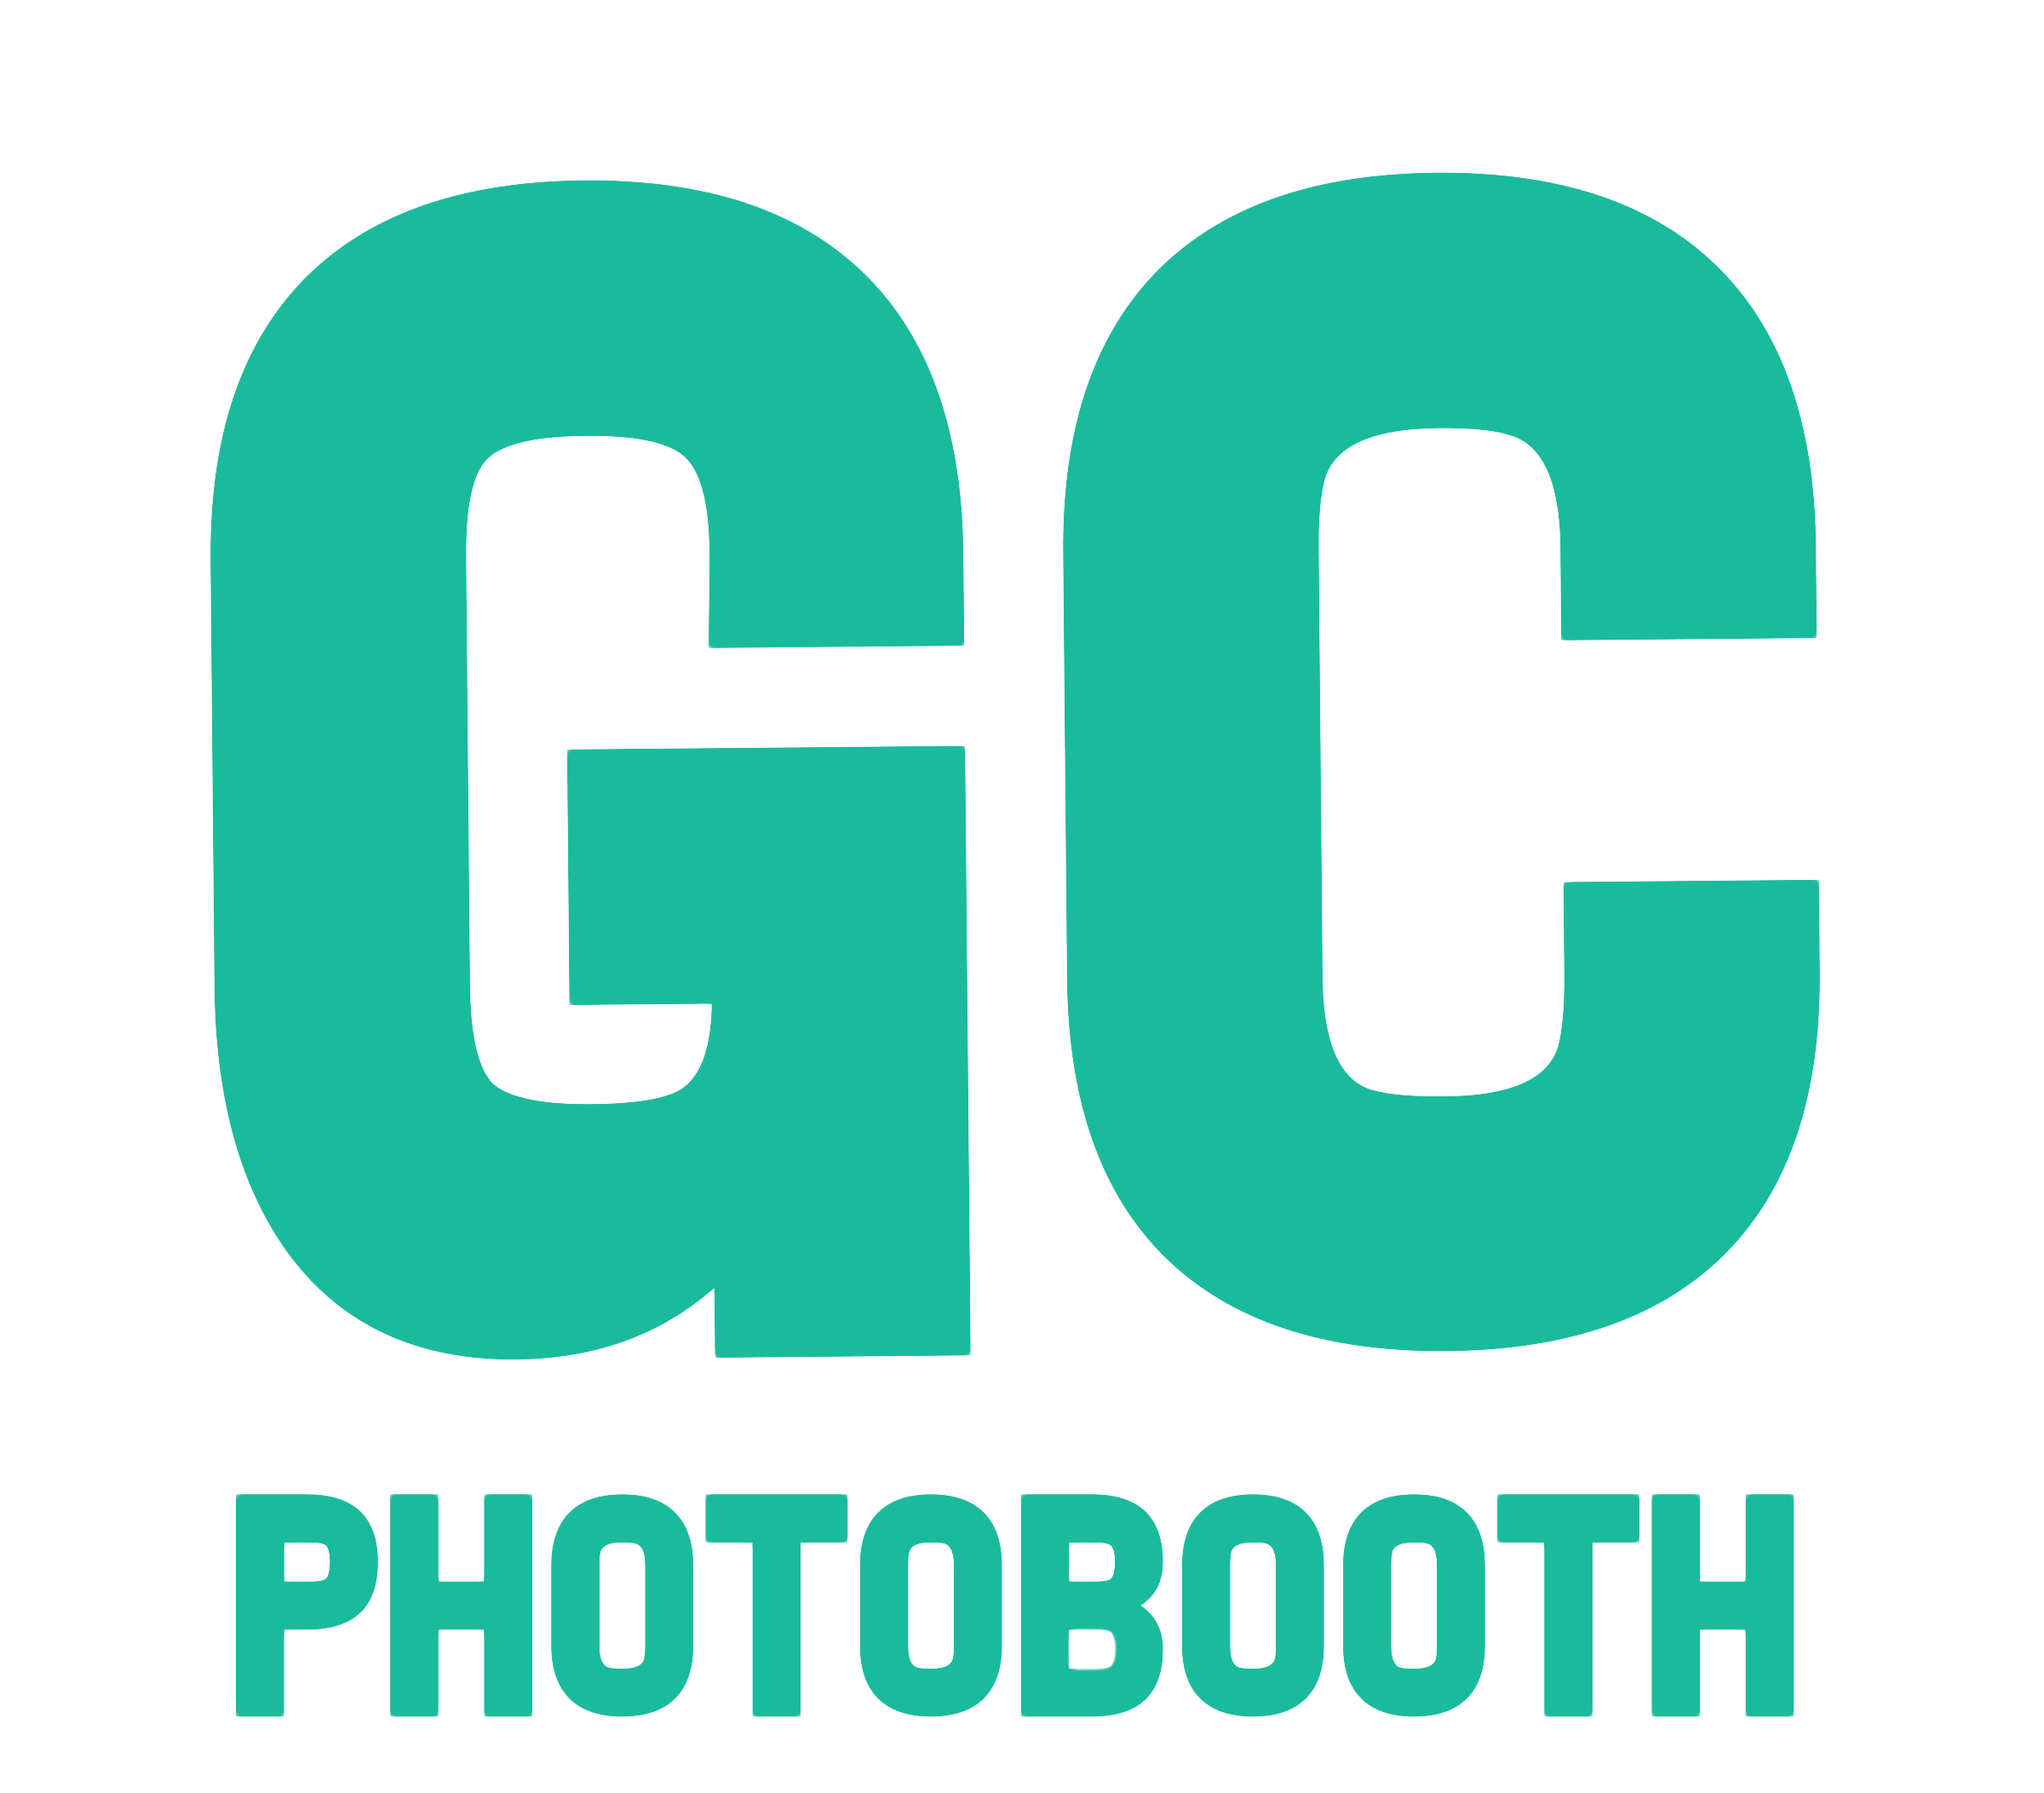 GC Photo Booth